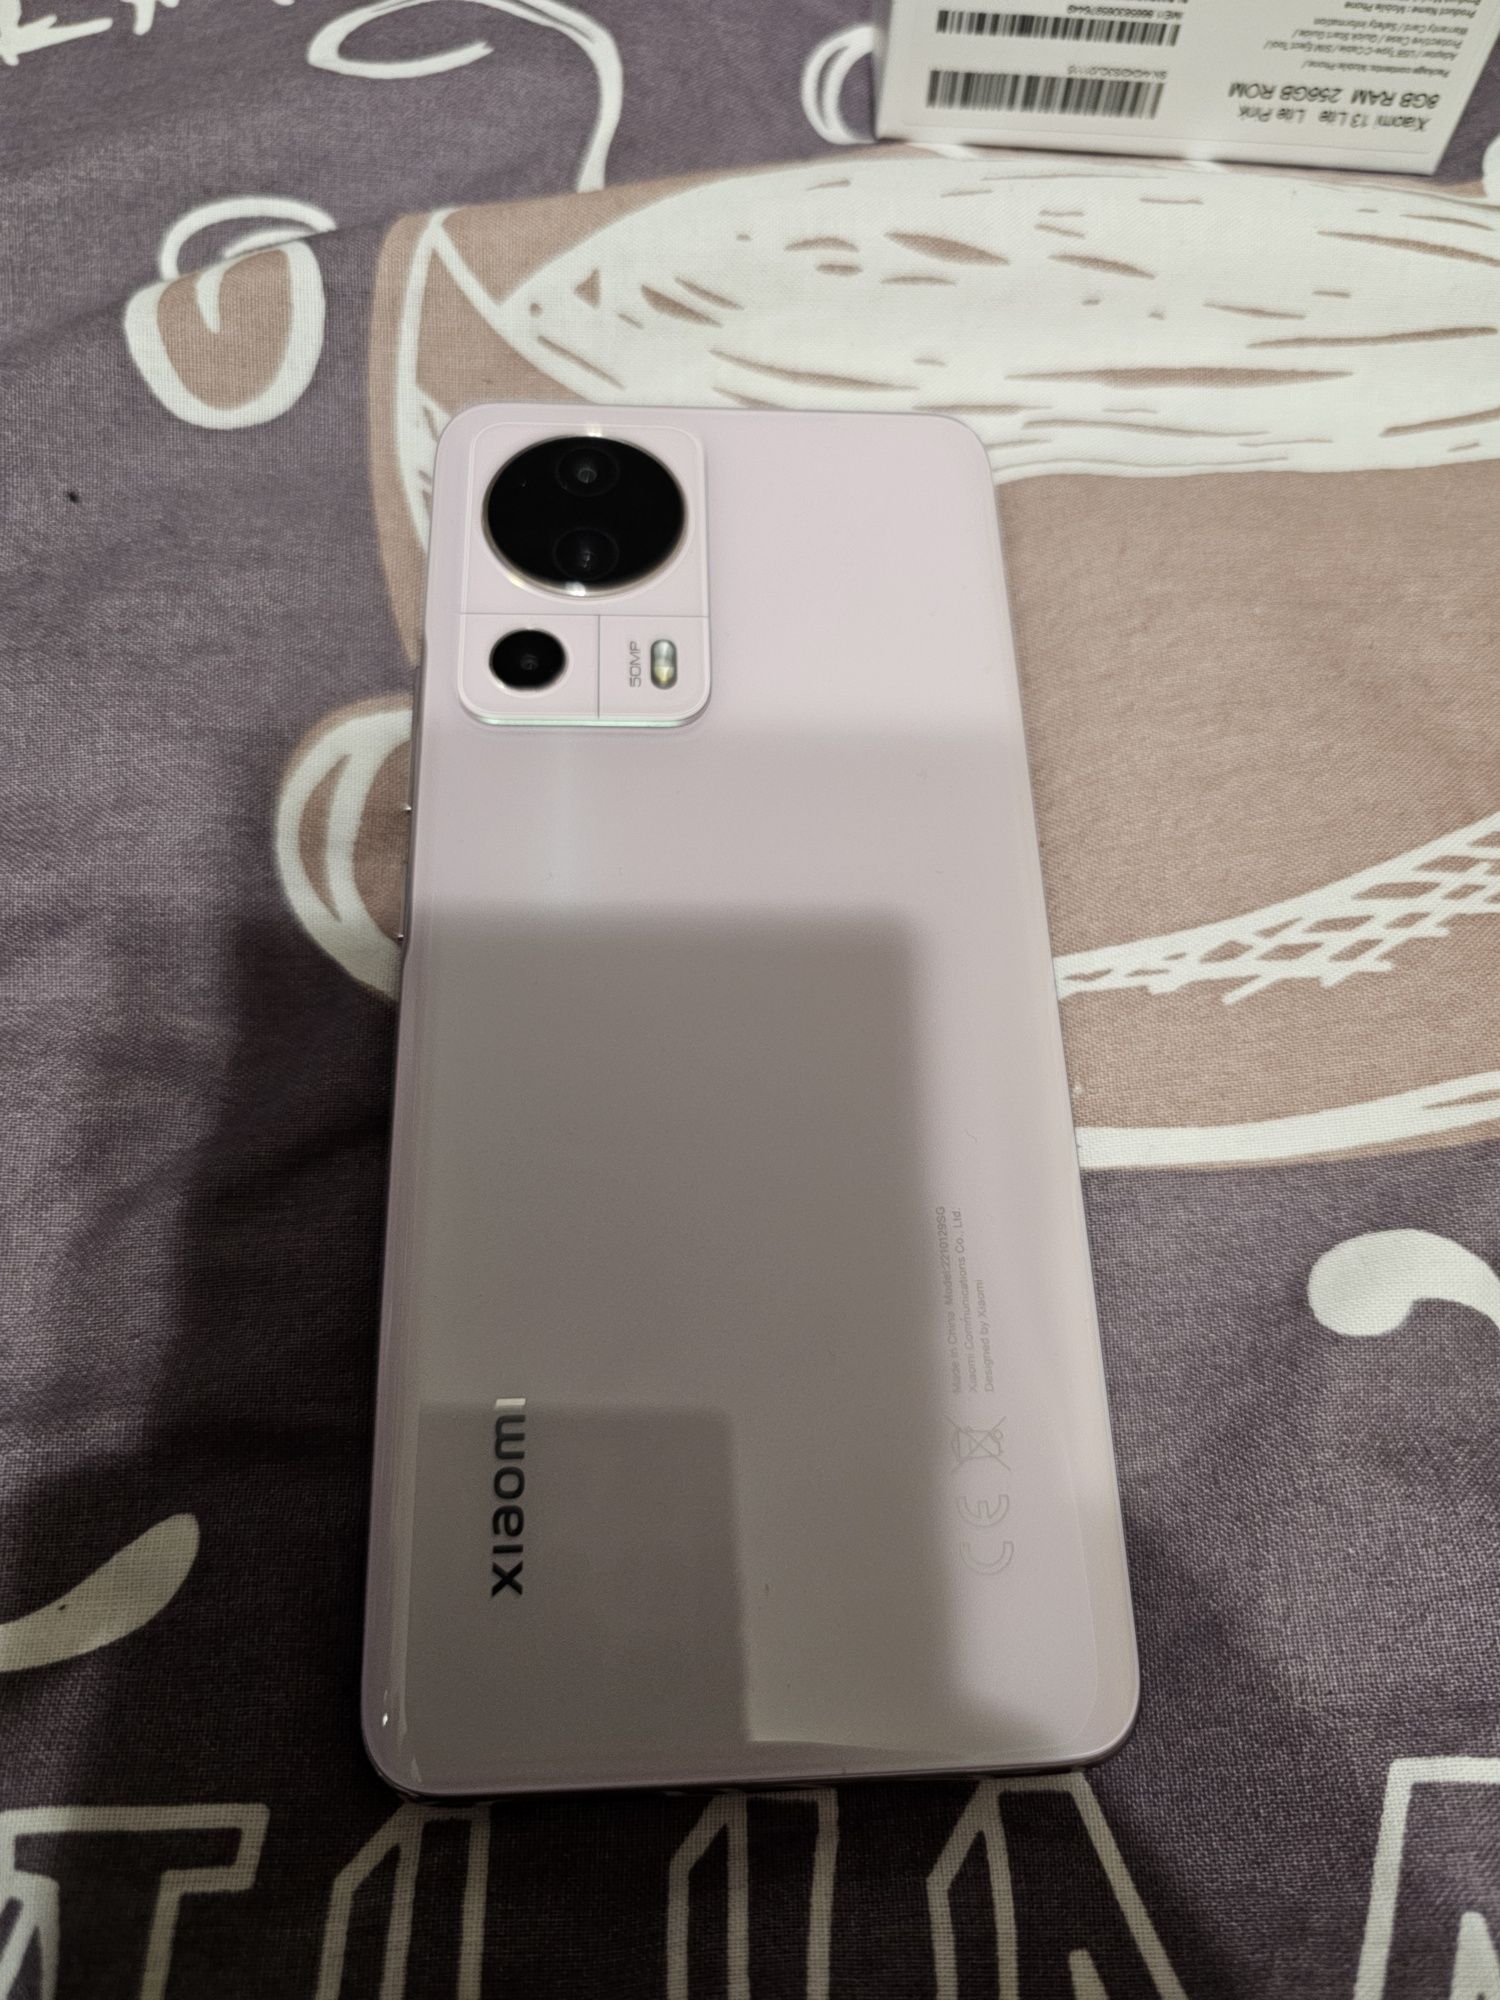 Смартфон Xiaomi 13 Lite Pink 8/256